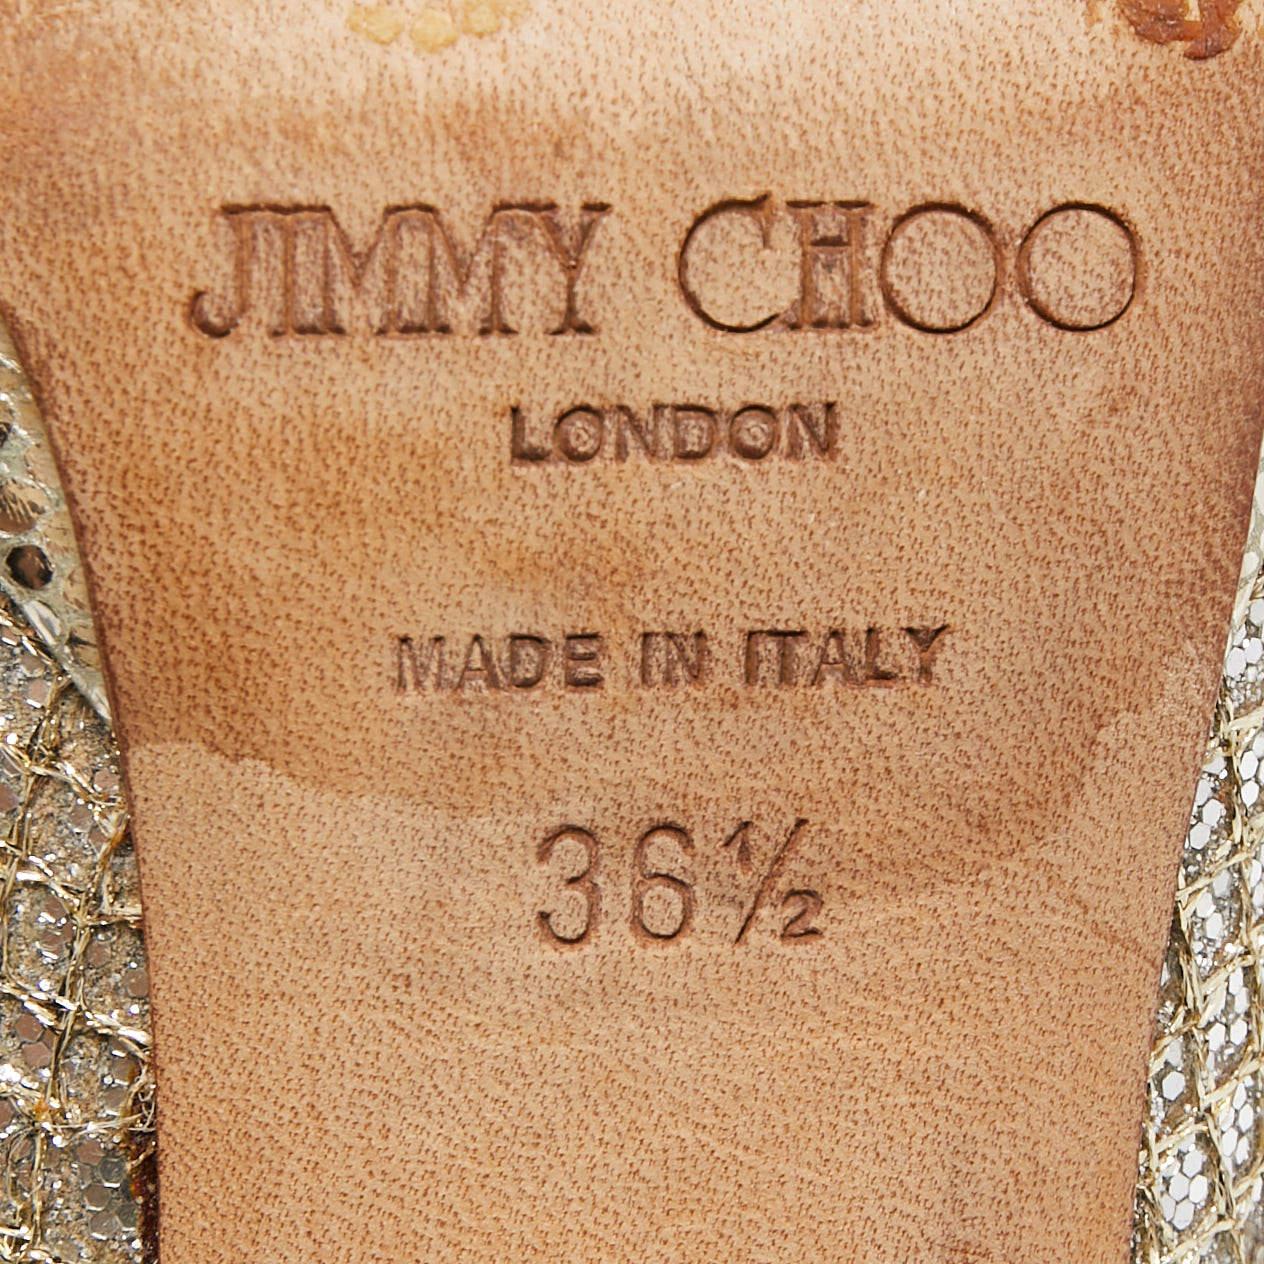 Jimmy Choo Silver/Gold Glitter Fabric Platform Pumps Size 36.5 For Sale 1